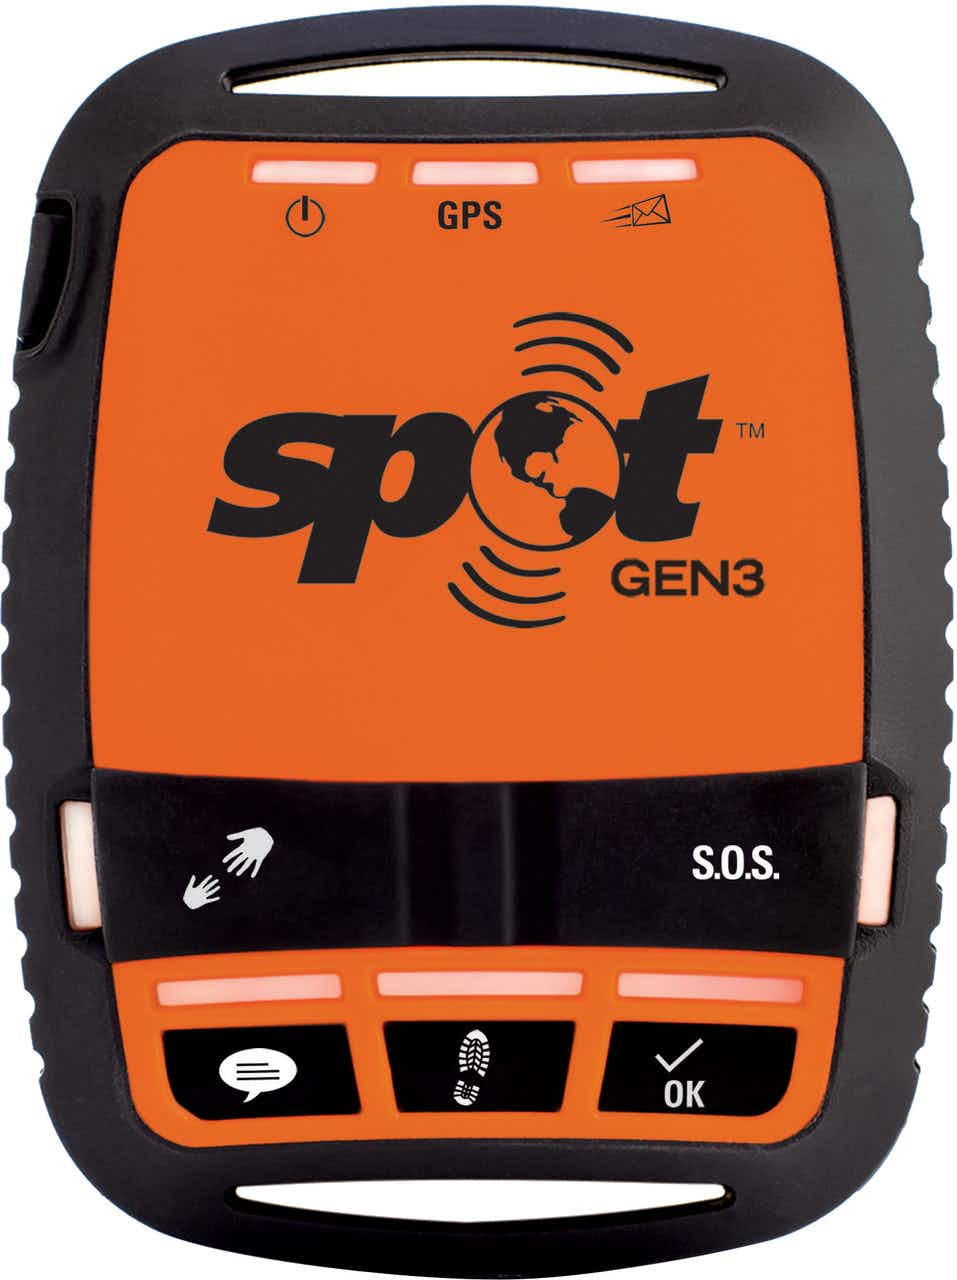 Dispositif messagerie GPS par satellite SPOT Gen3 Orange